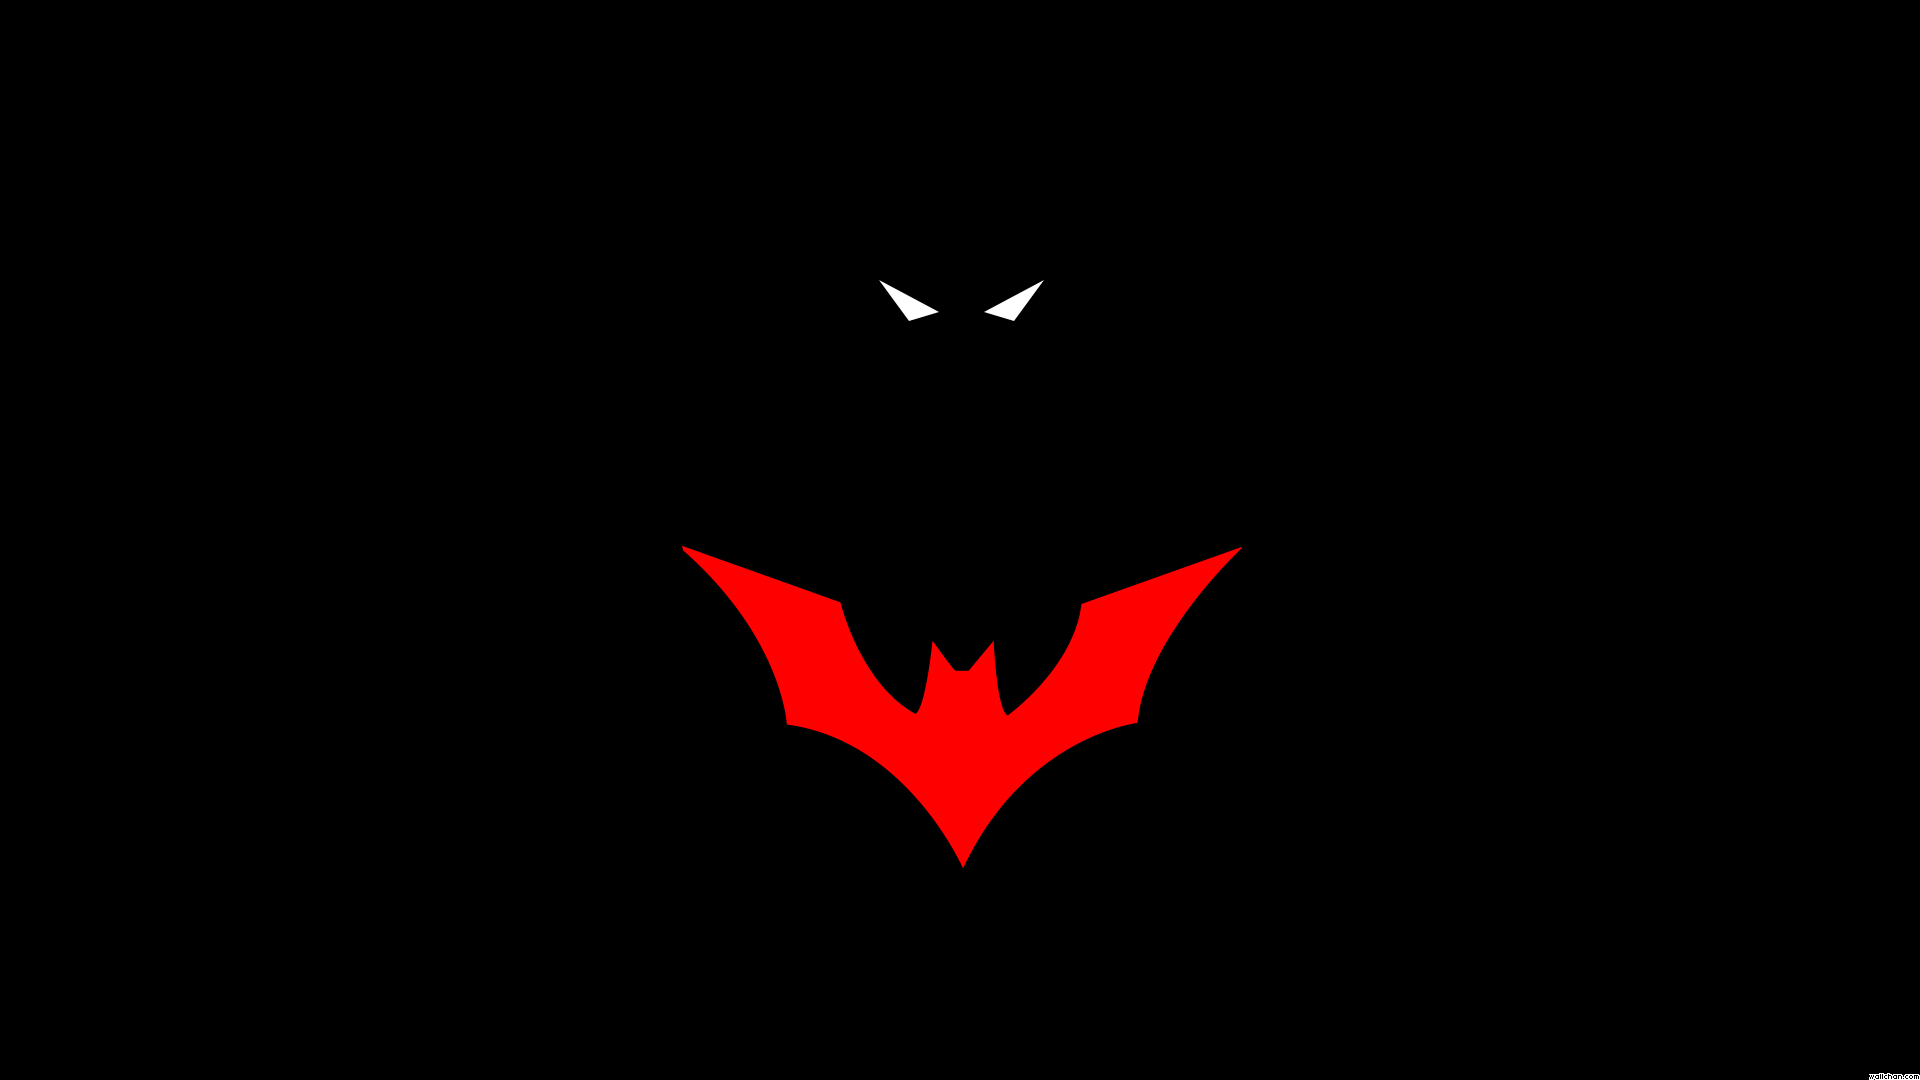 Wallpaper, logo, Batman Beyond, wing, bat, computer wallpaper, font 1920x1080